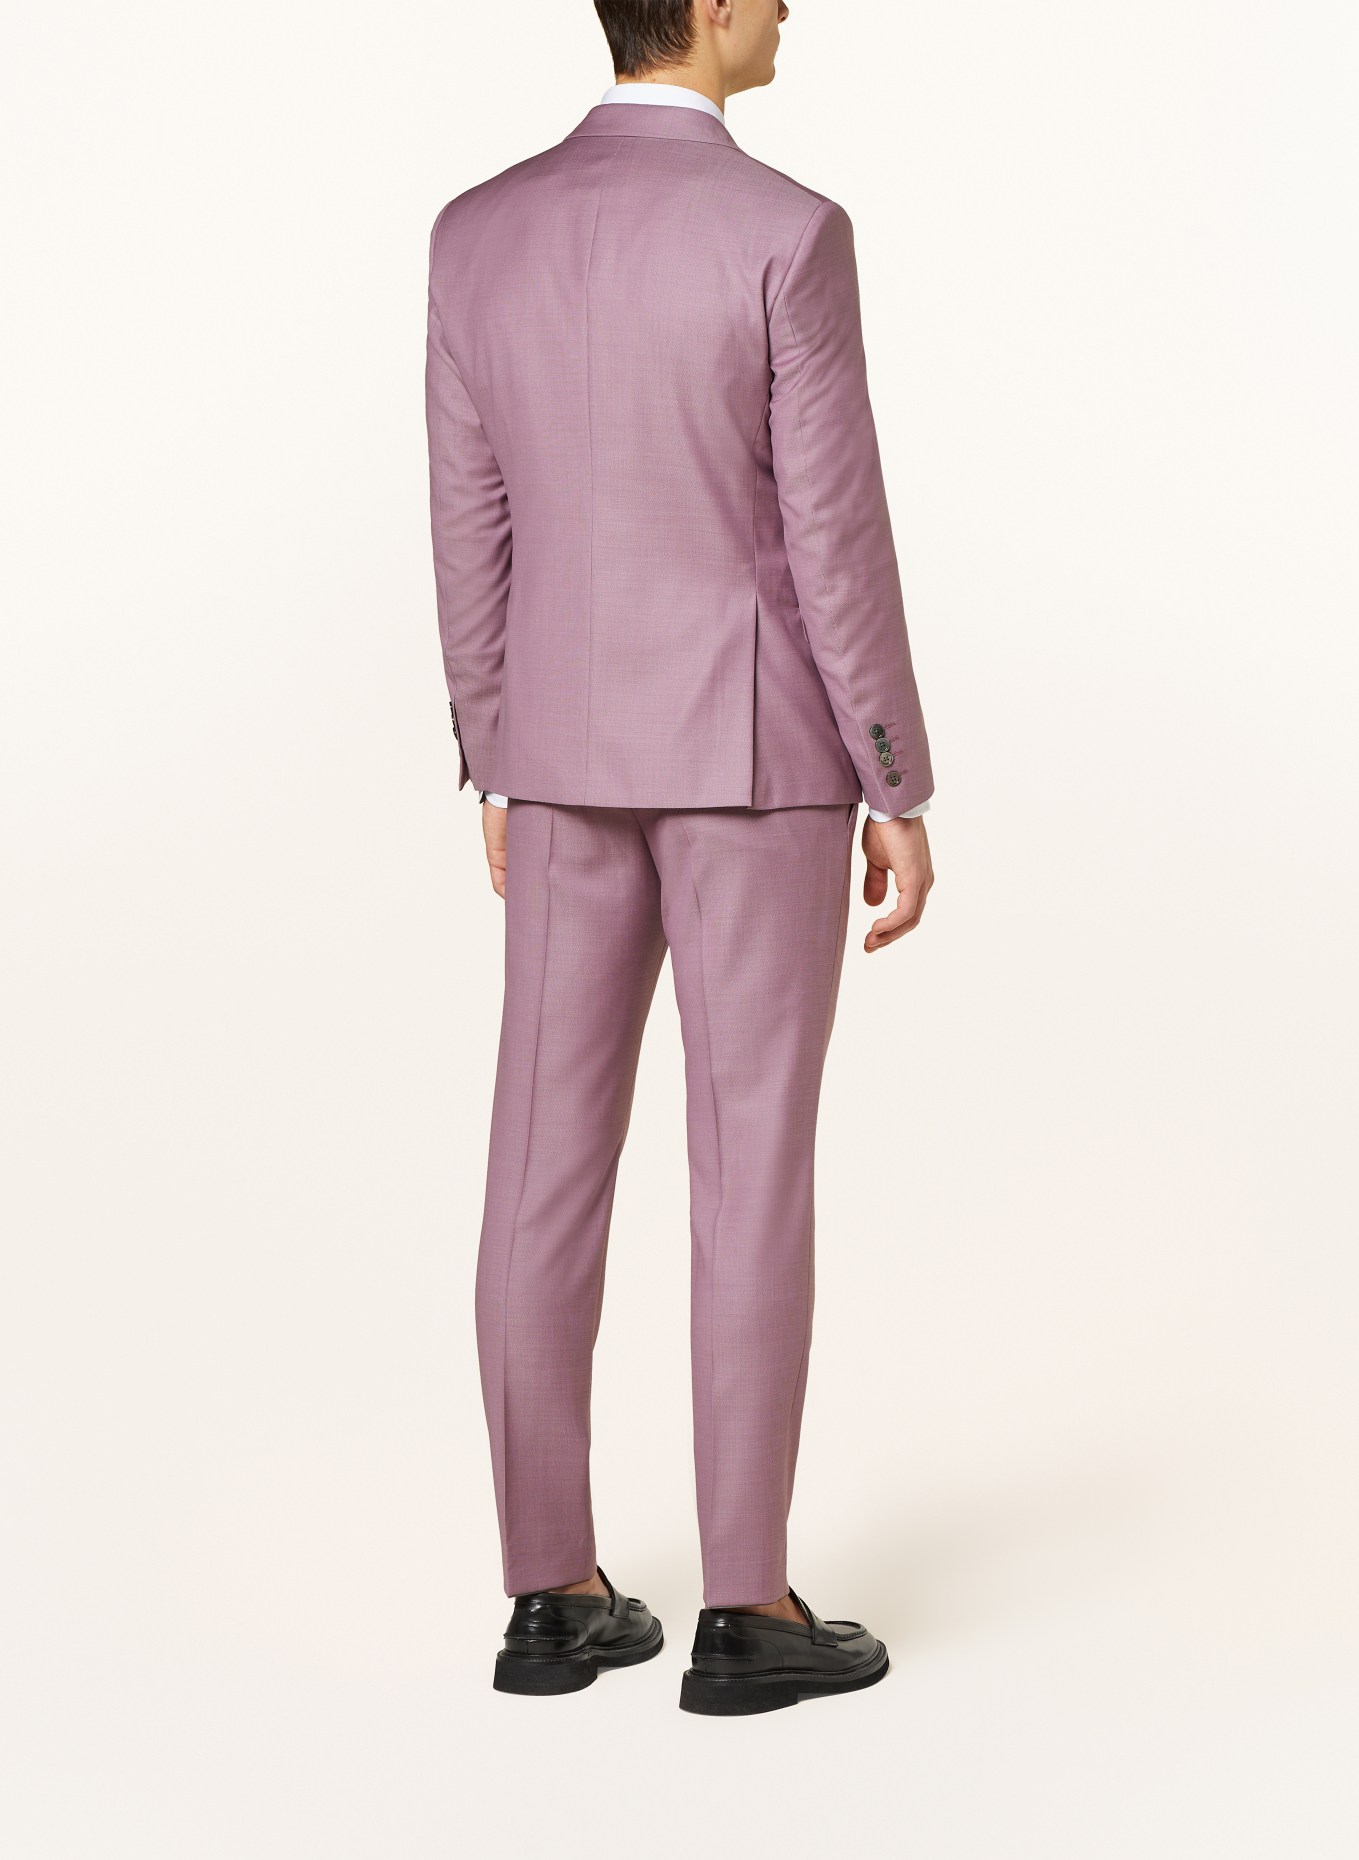 JOOP! Suit jacket HAWKER slim fit, Color: 650 Dark Pink                  650 (Image 3)